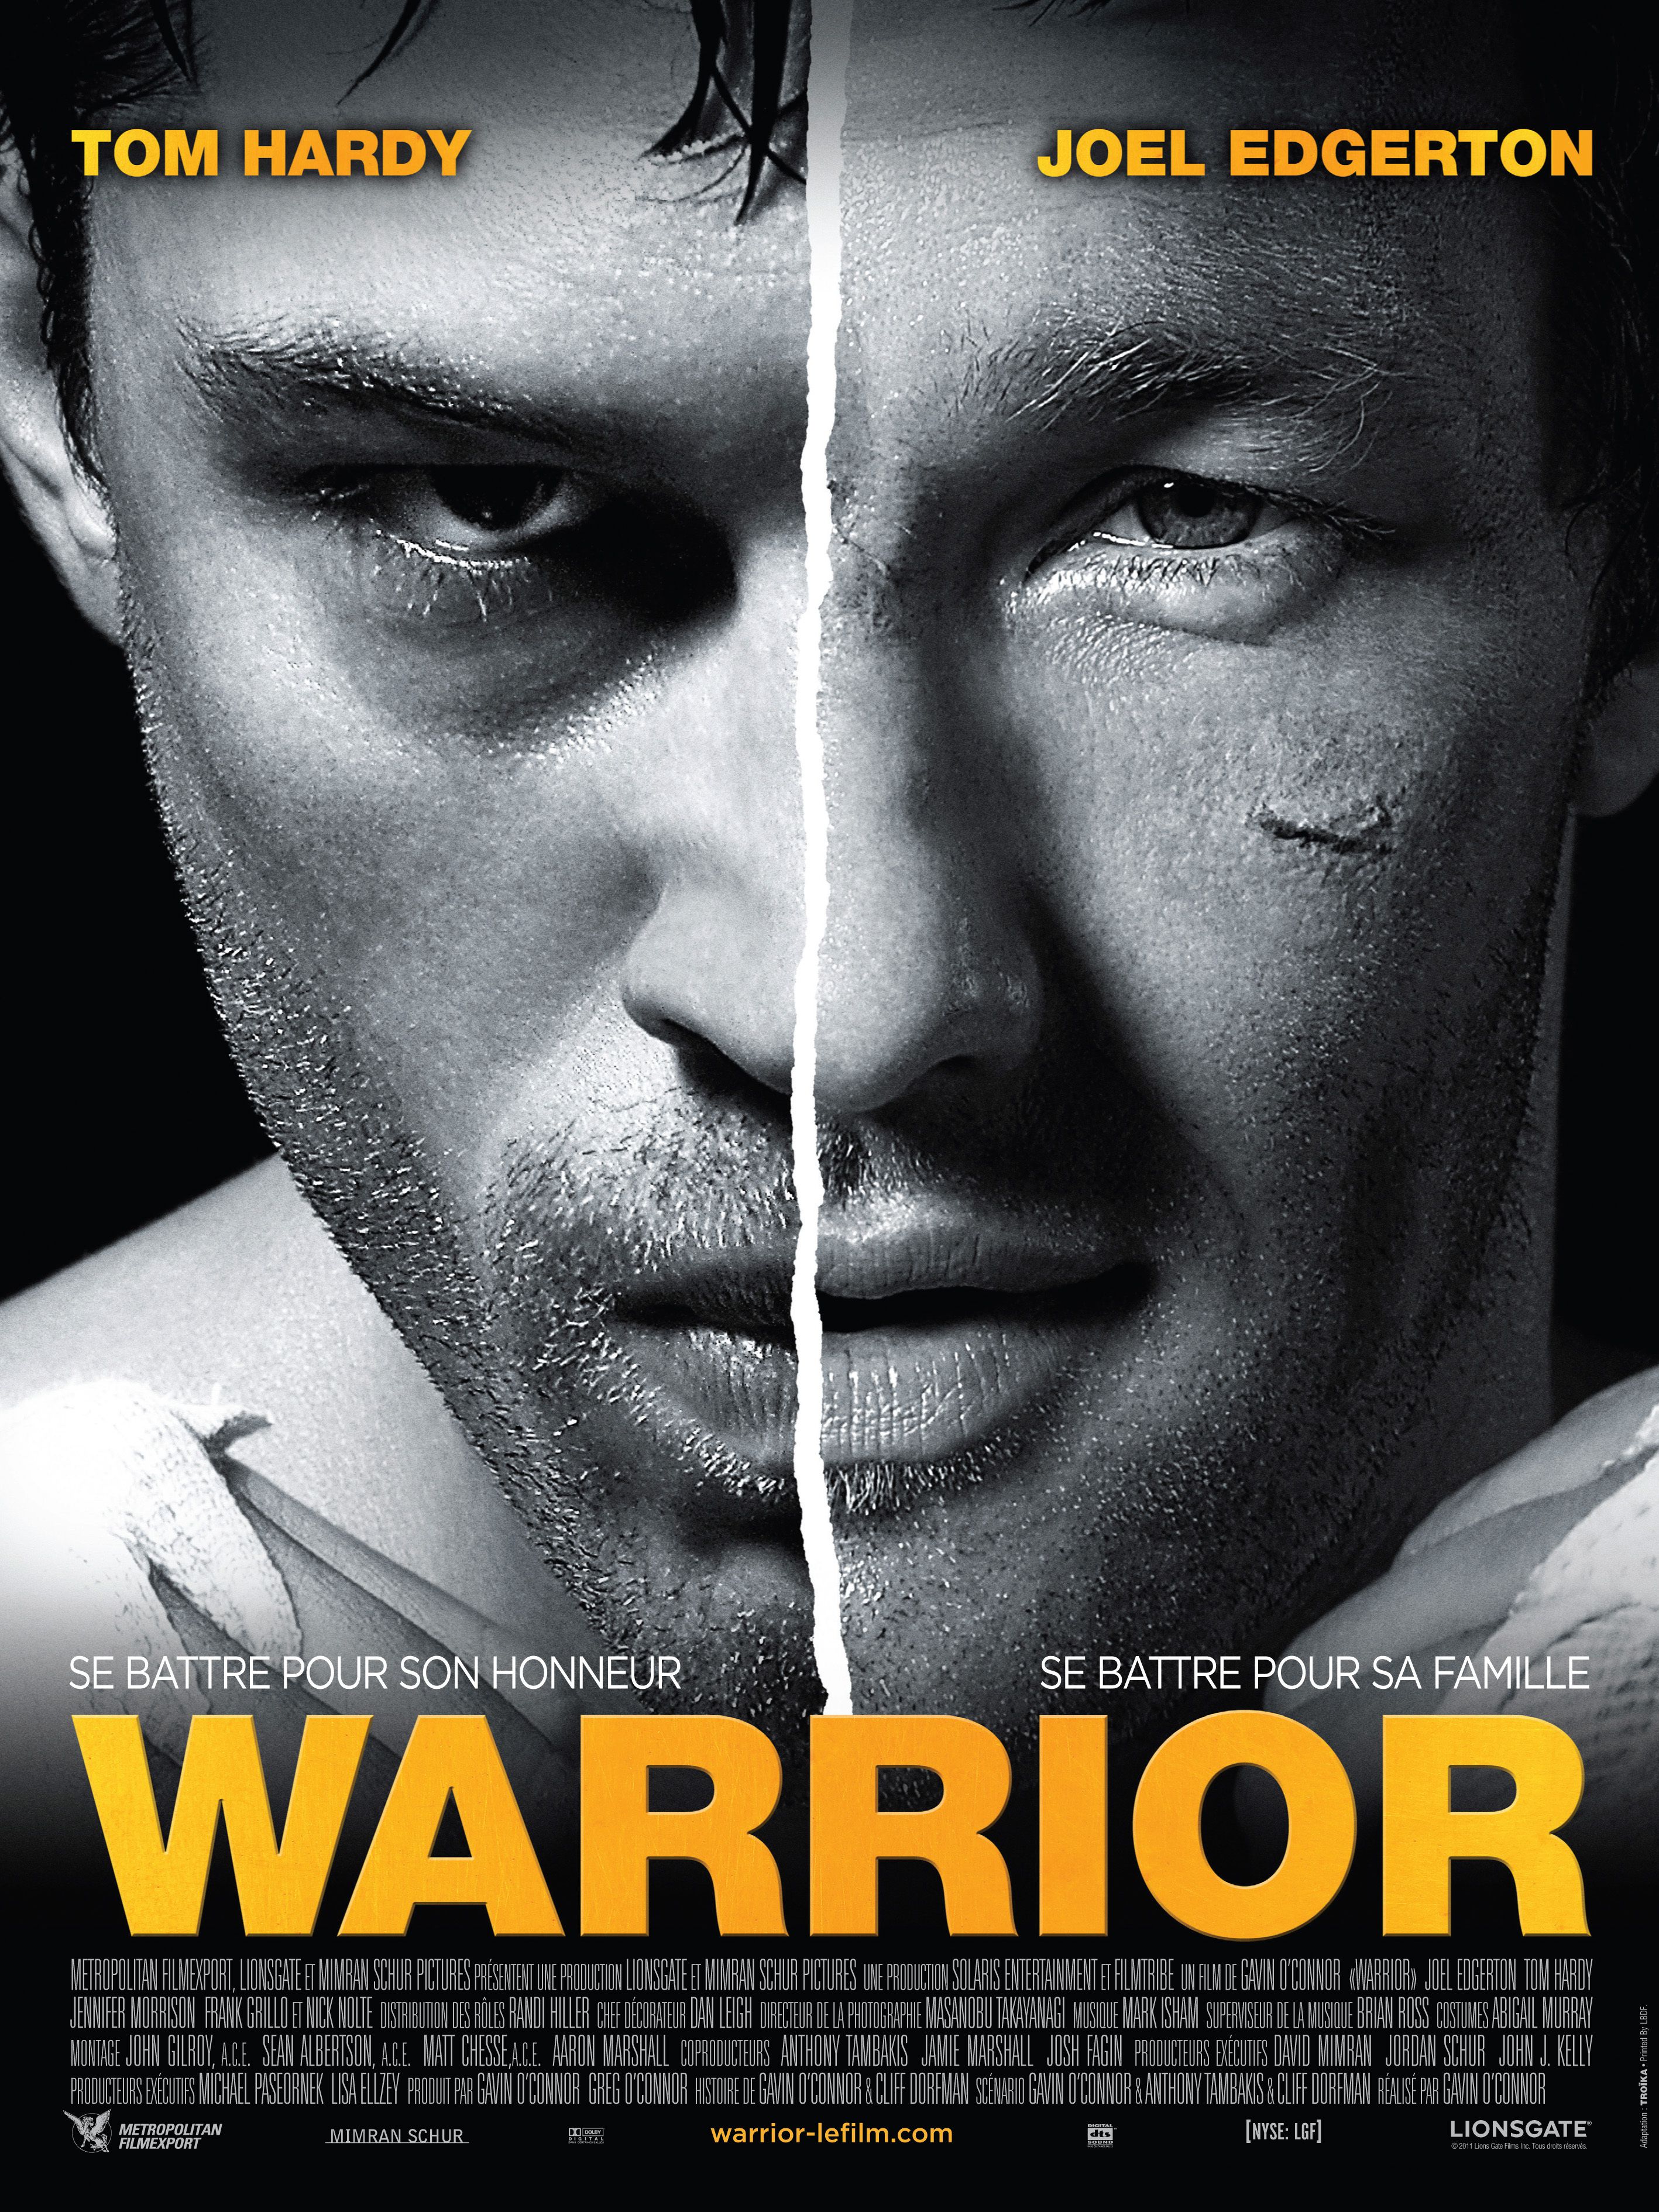 Warrior - Film (2011) streaming VF gratuit complet